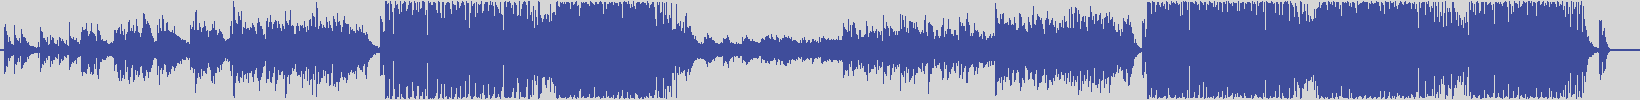 suxess [SX013] Dankann - Paralyzed [Original Mix] audio wave form